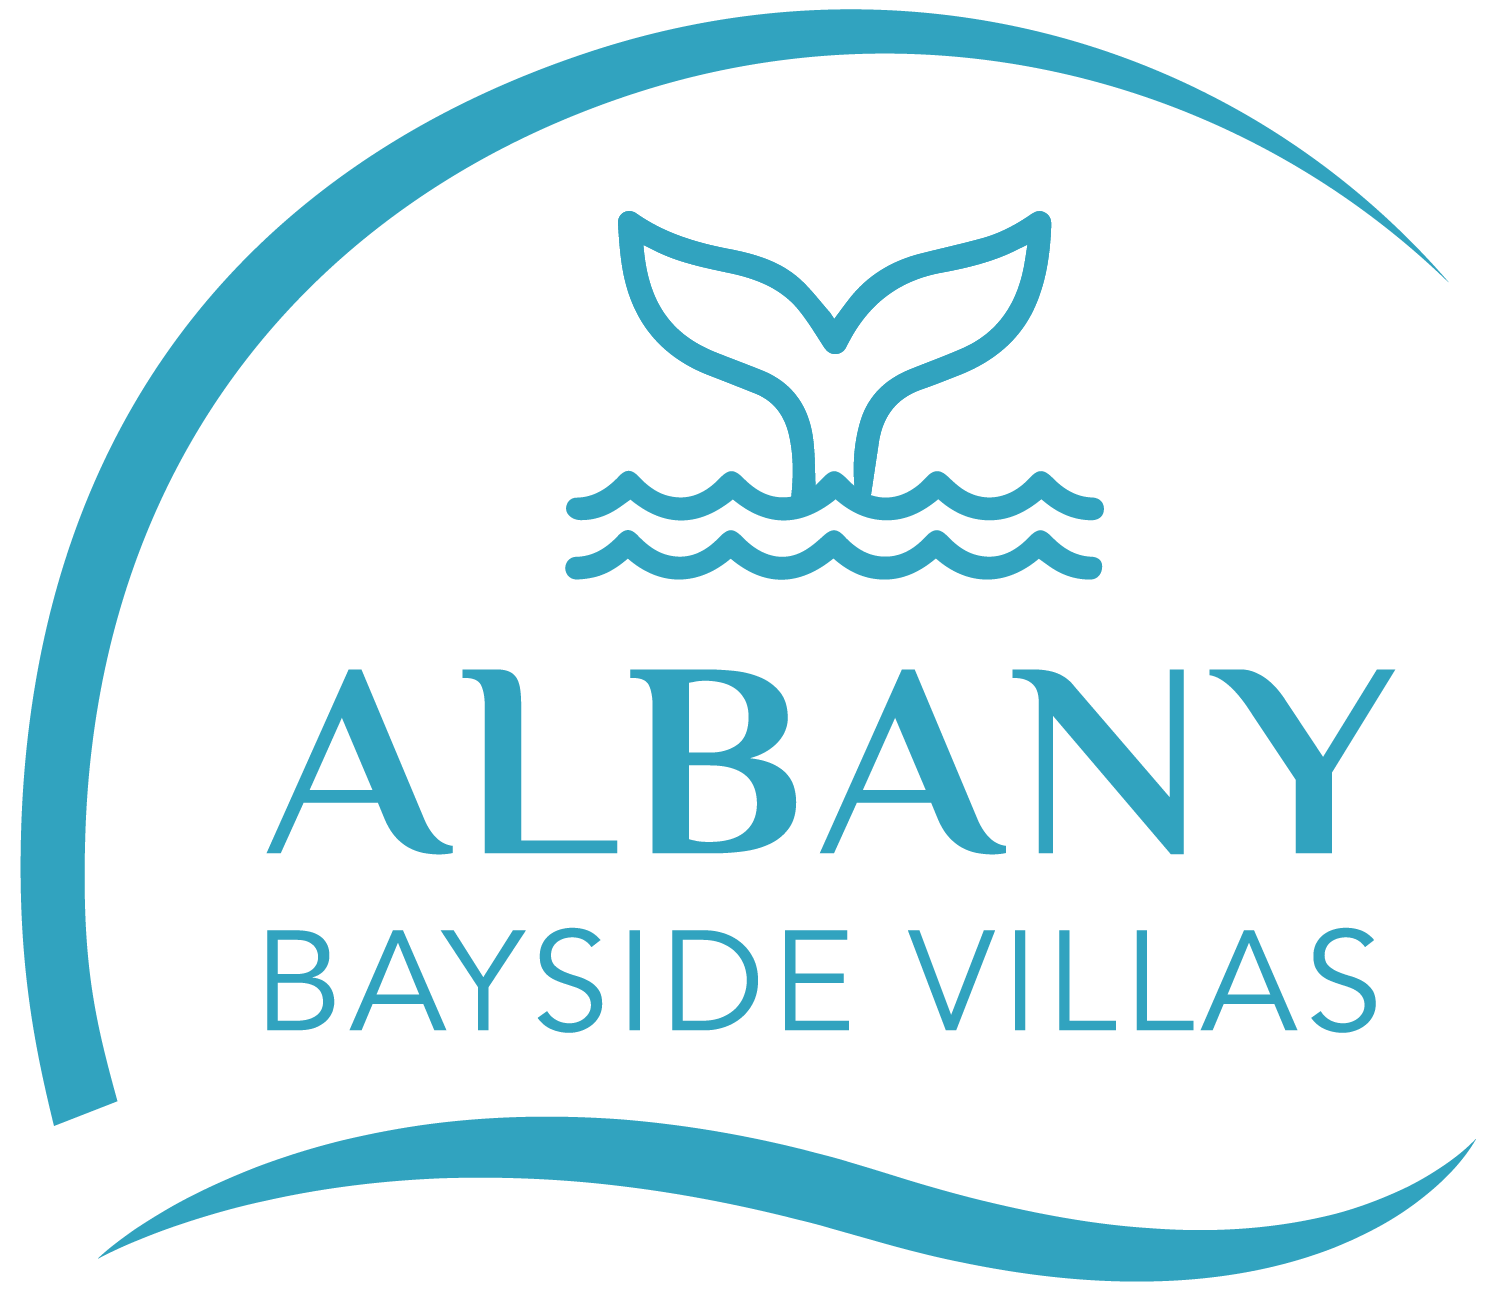 Albany Bayside Villas